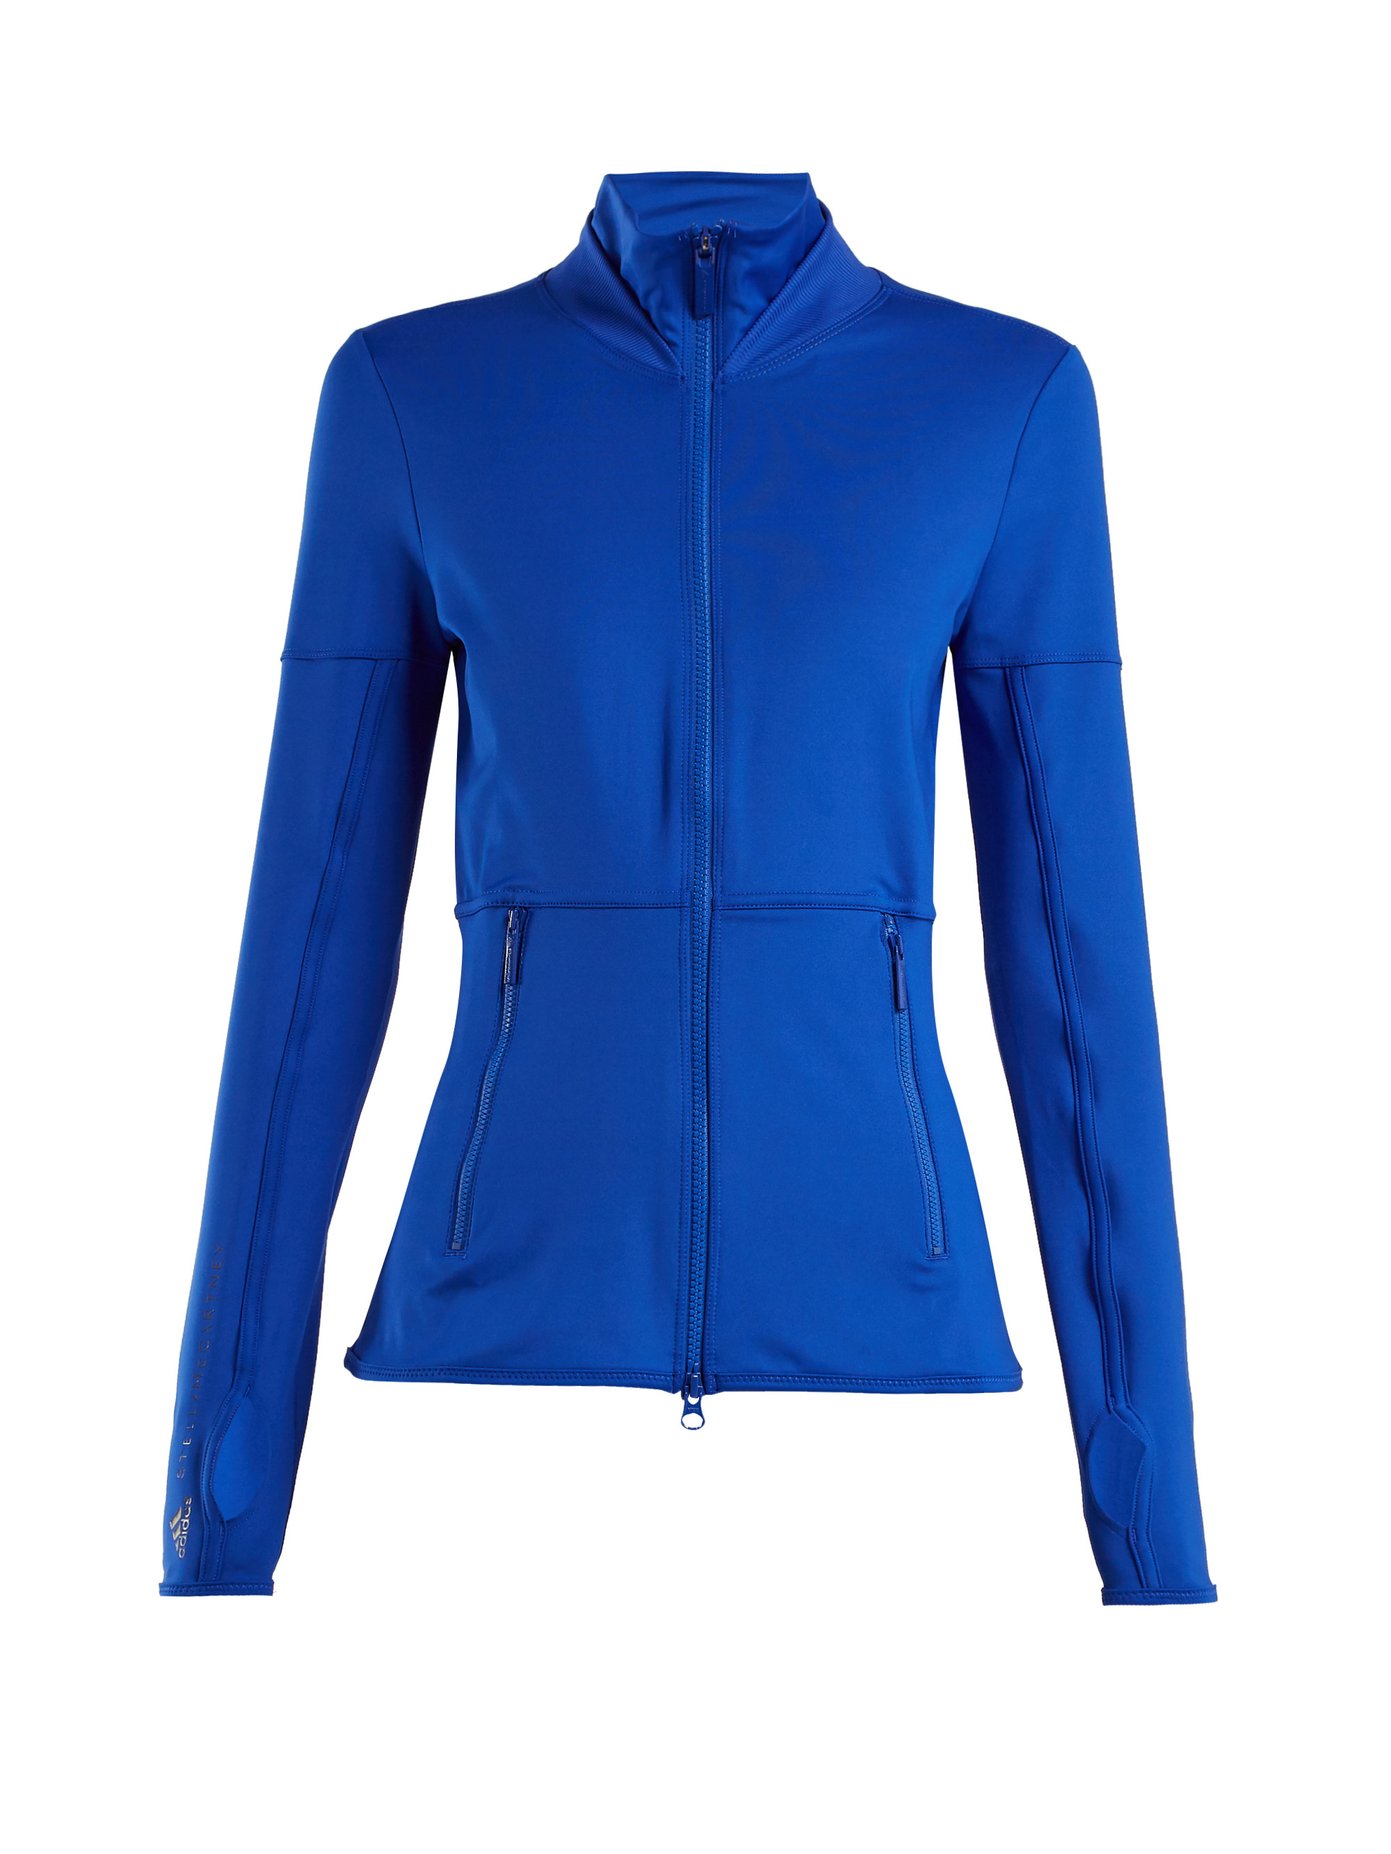 stella mccartney adidas blue jacket